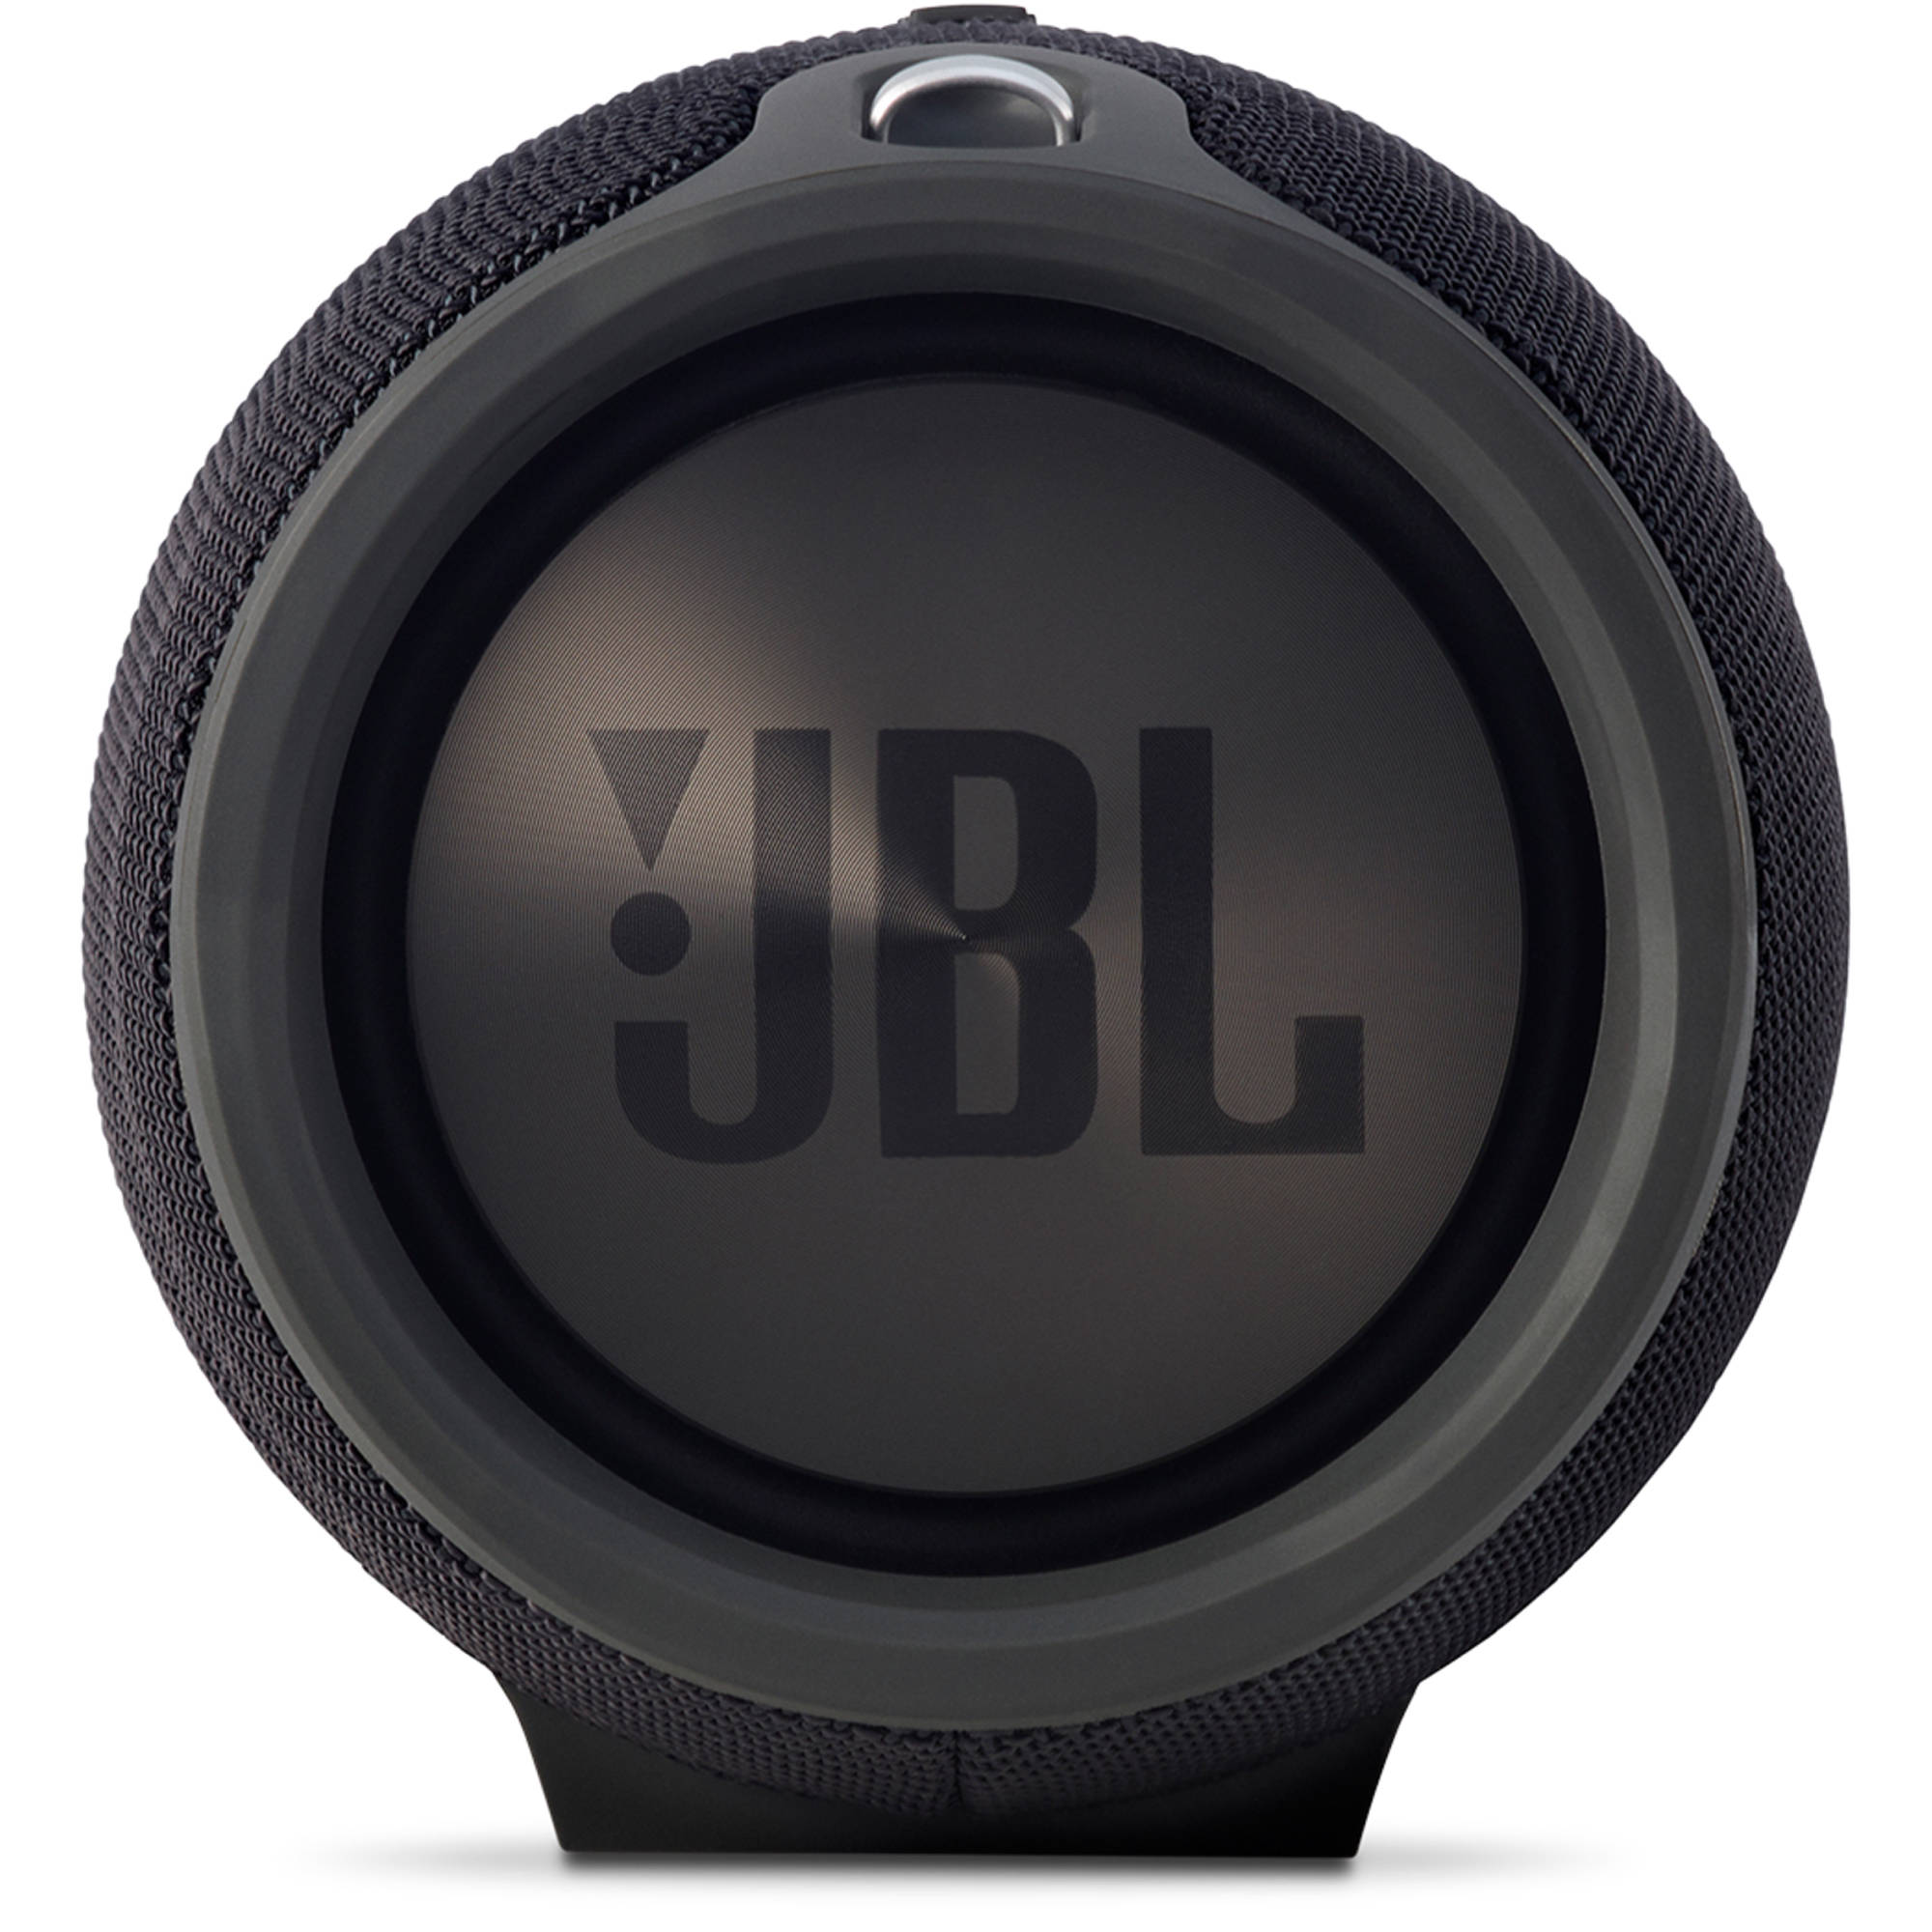 JBL JBLXTREMEBLKUS-Z Xtreme Portable Bluetooth Speaker Black - Certified Refurbished